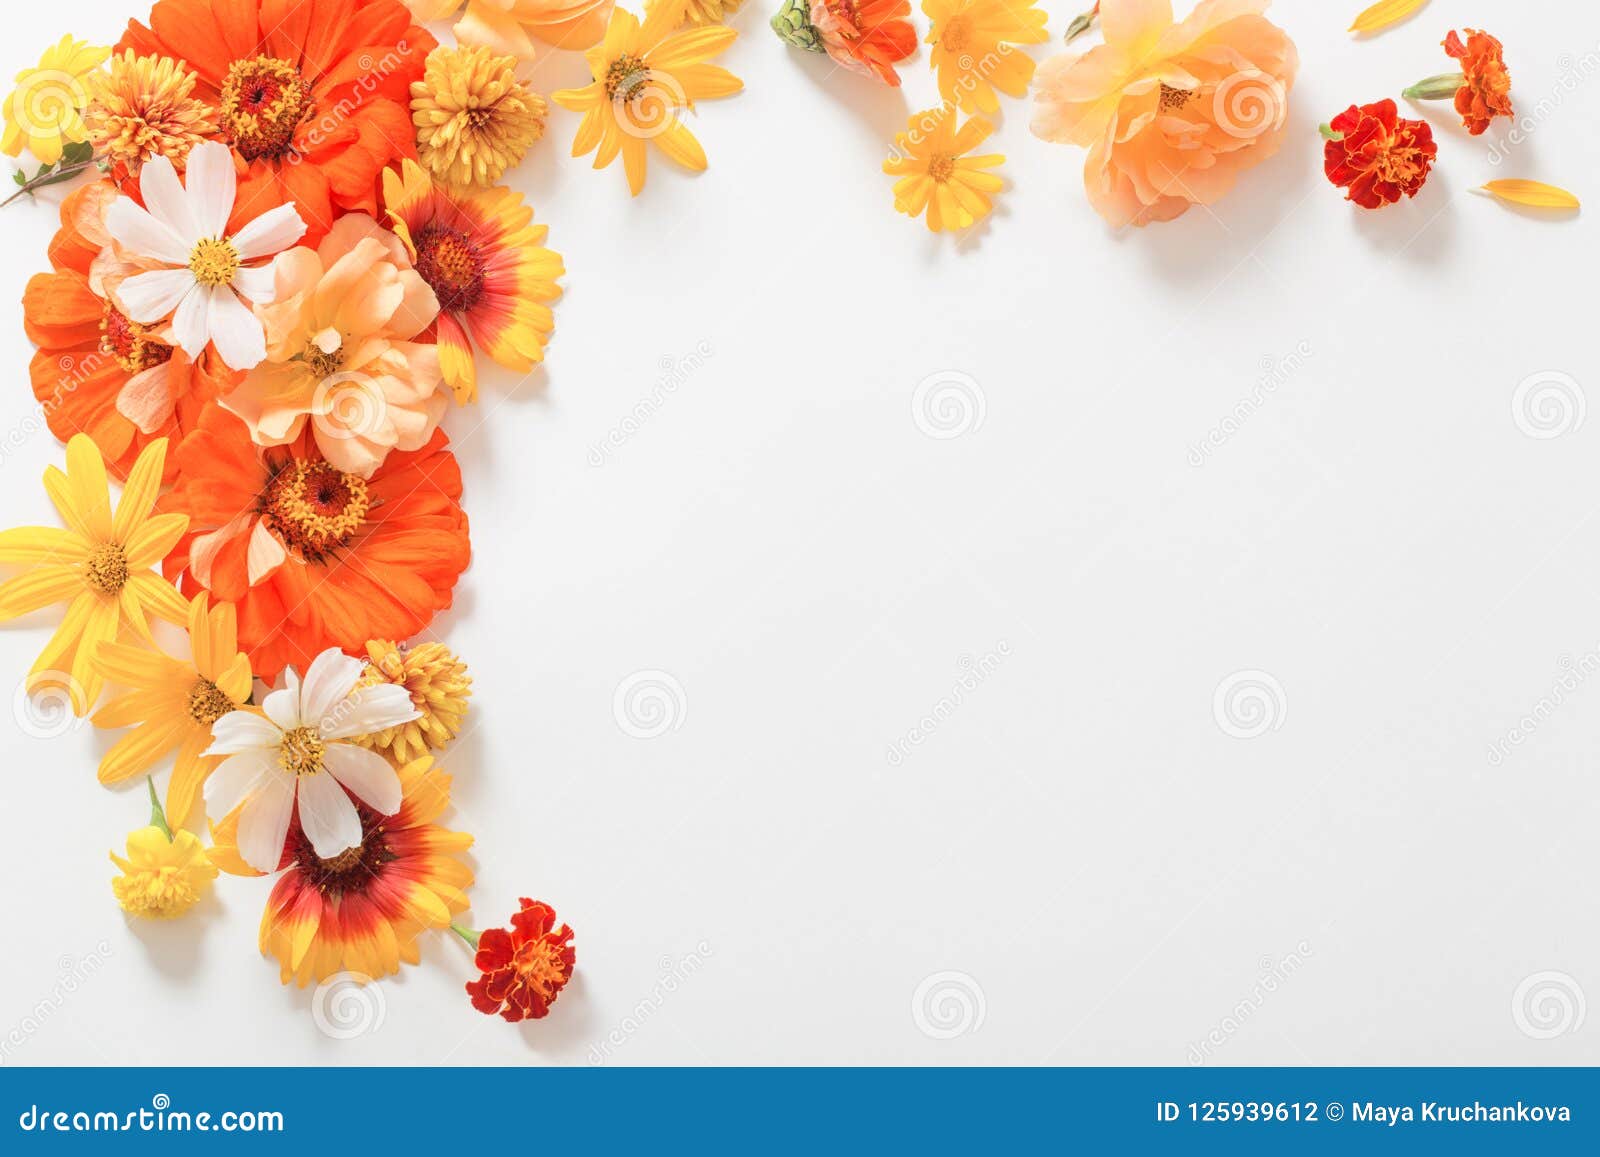 Yellow and Orange Flowers on White Background Stock Photo - Image ...